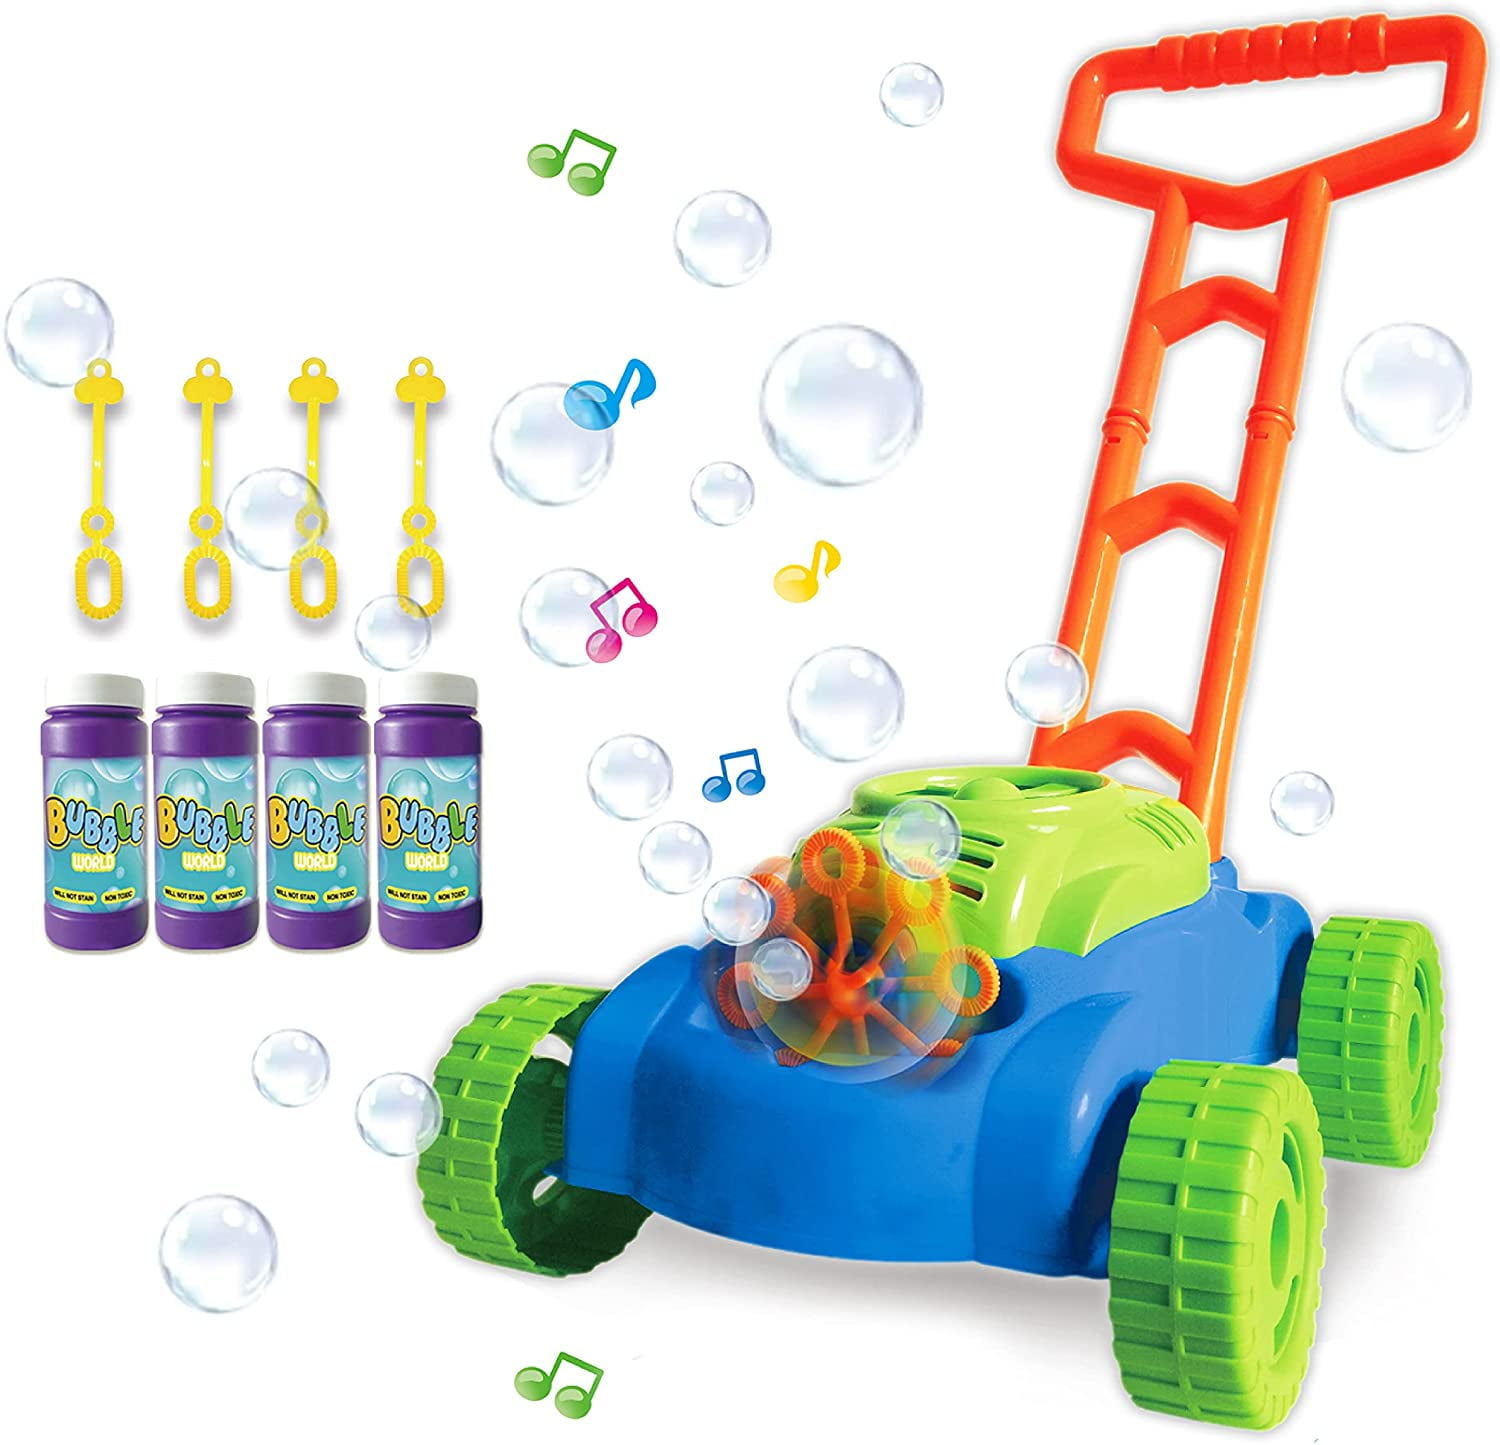 Bubbletastic Kids Auto Bubble Machine Lawn Mower Outdoor Garden Toy for Children 